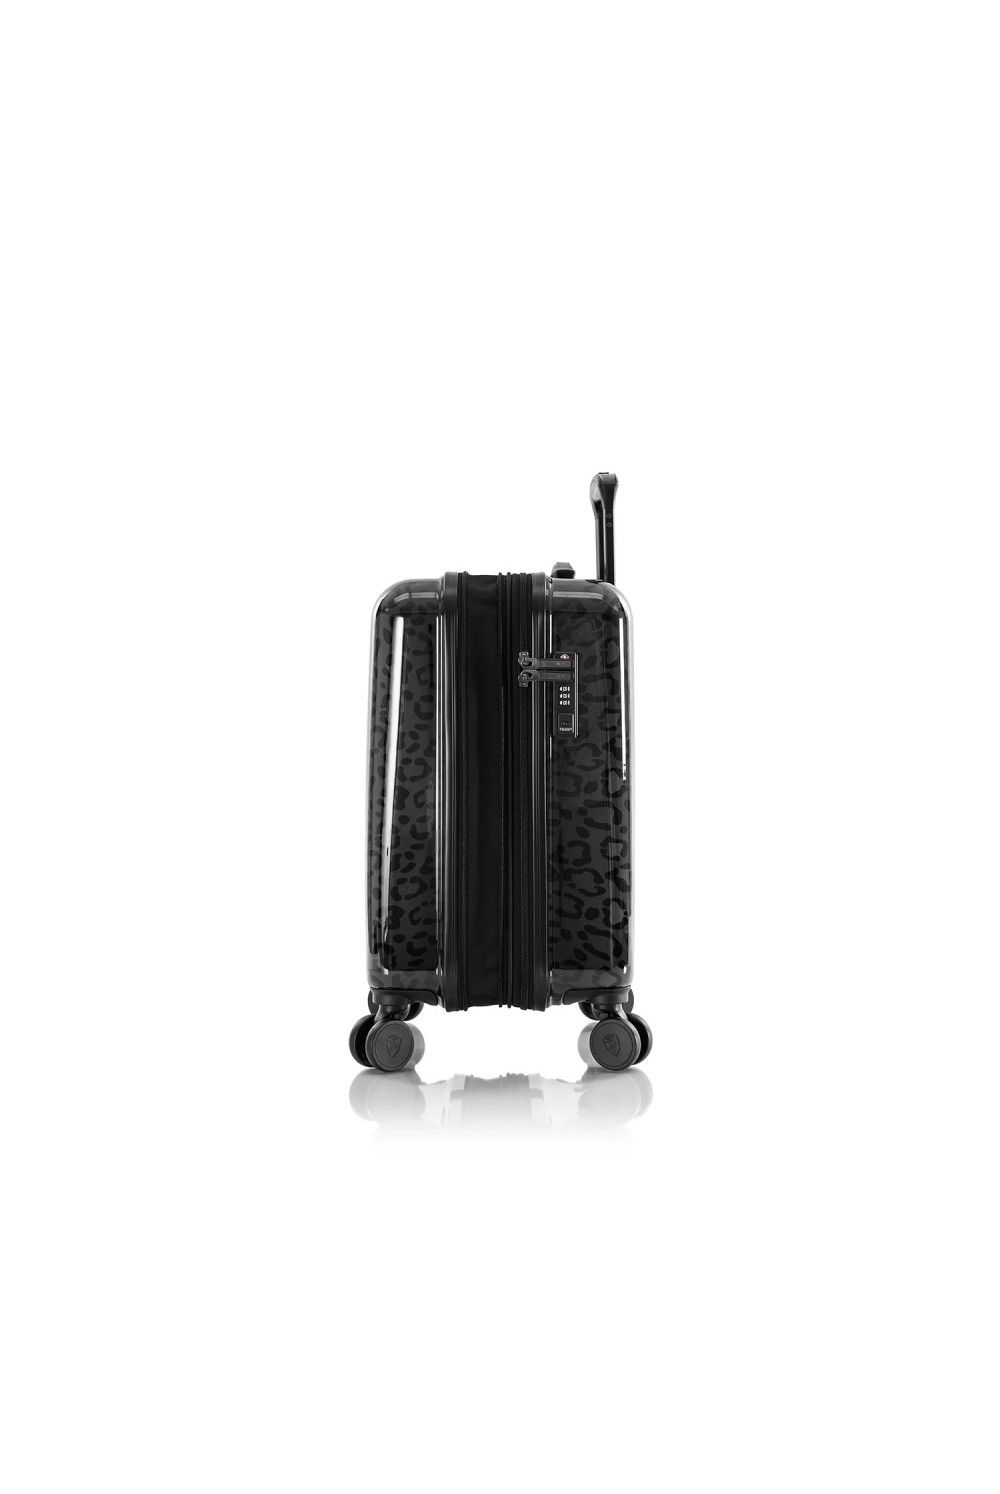 Suitcase hand luggage Heys Black Leopard 4 wheel 55cm expandable